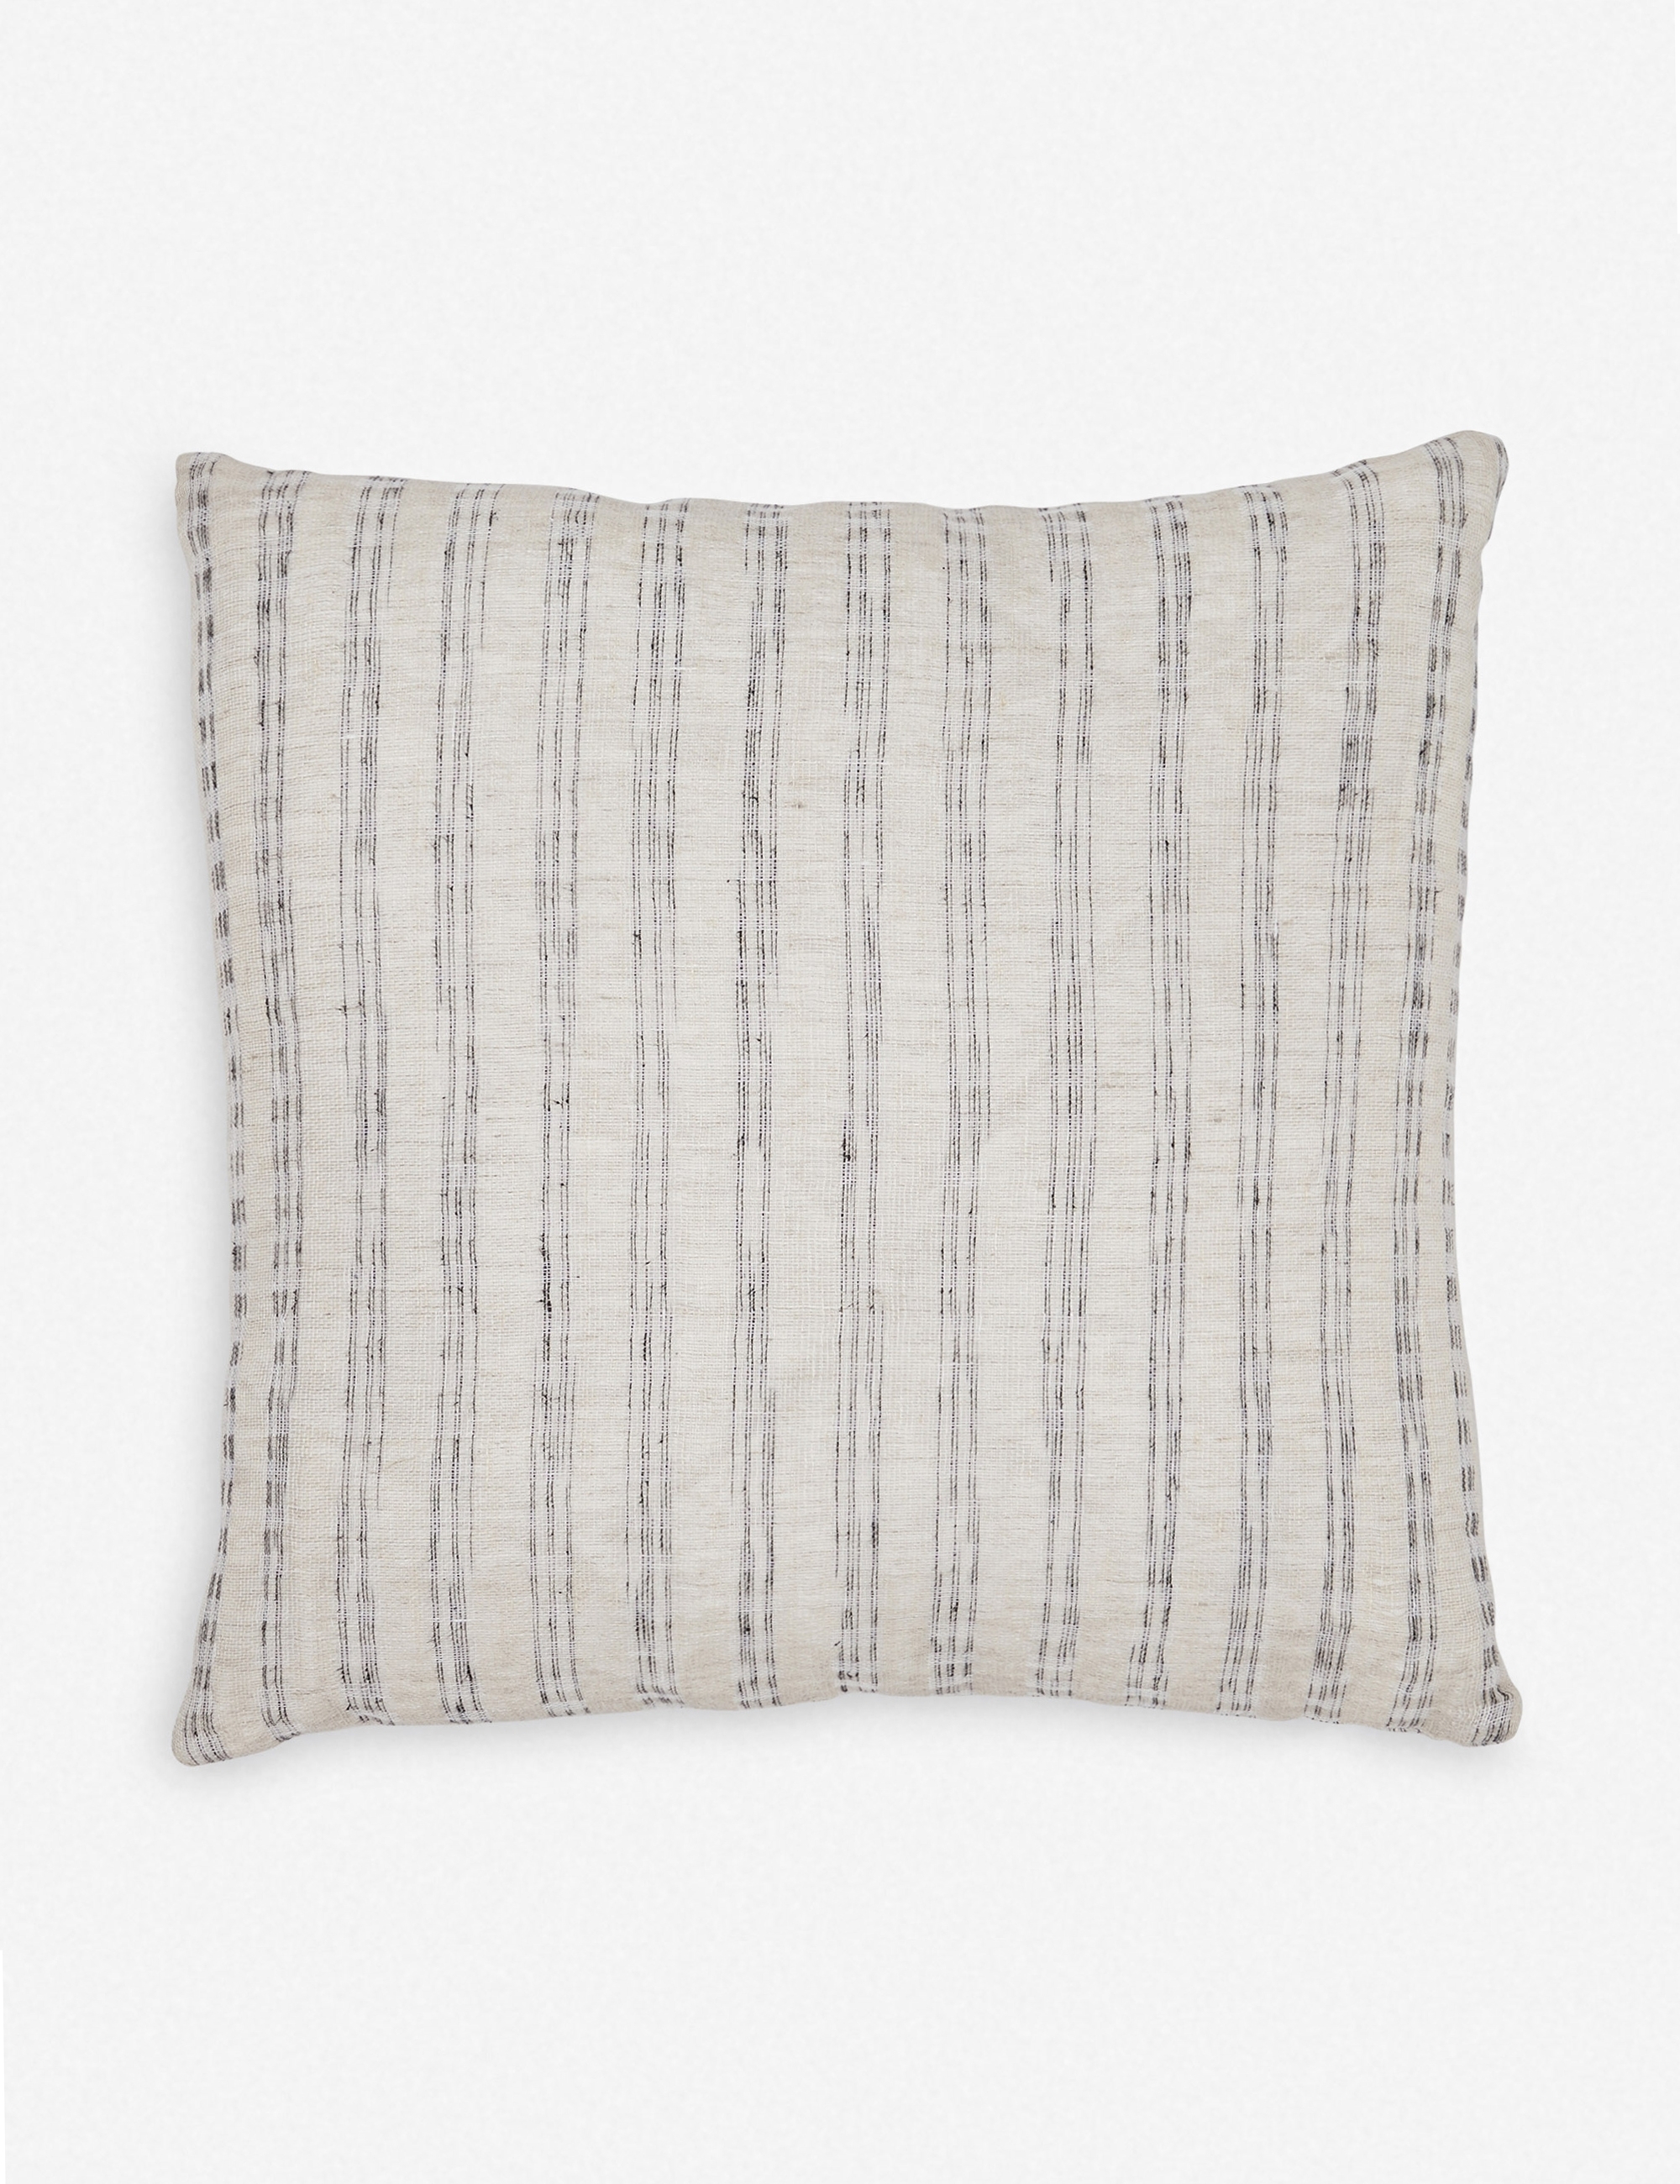 Vdara Linen Pillow - Image 3